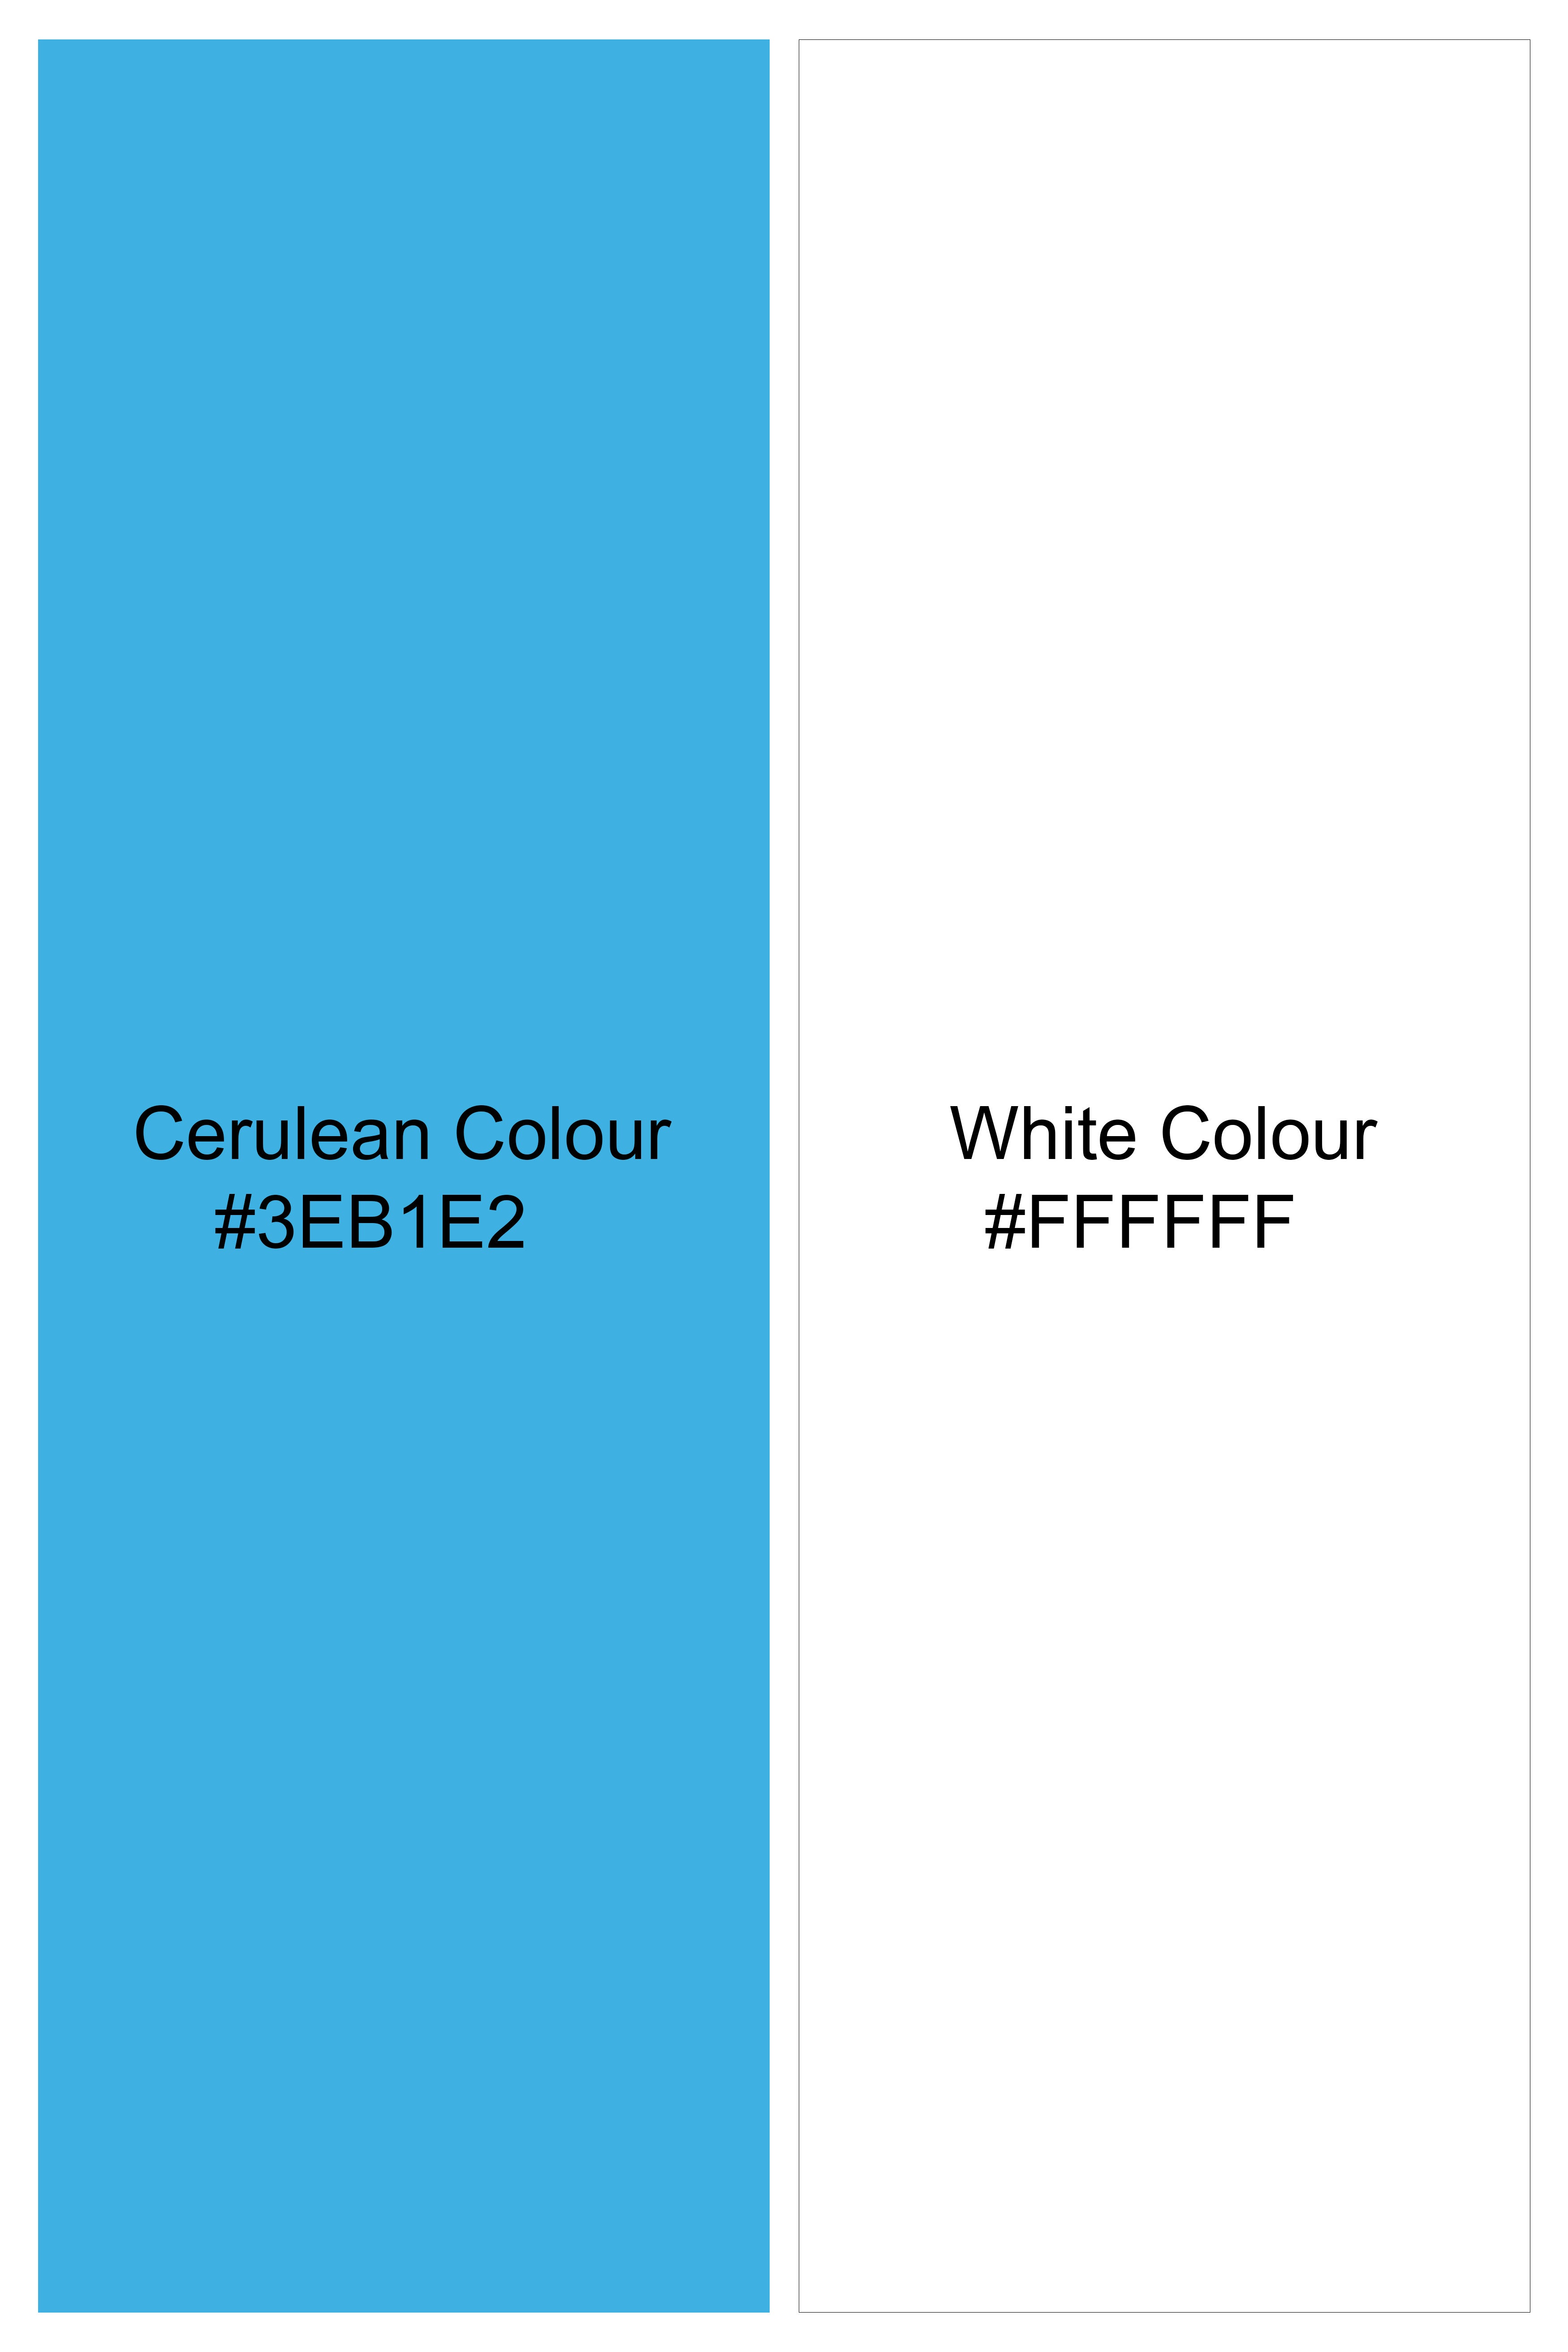 Cerulean Blue and White Jacquard Textured Premium Giza Cotton Shirt